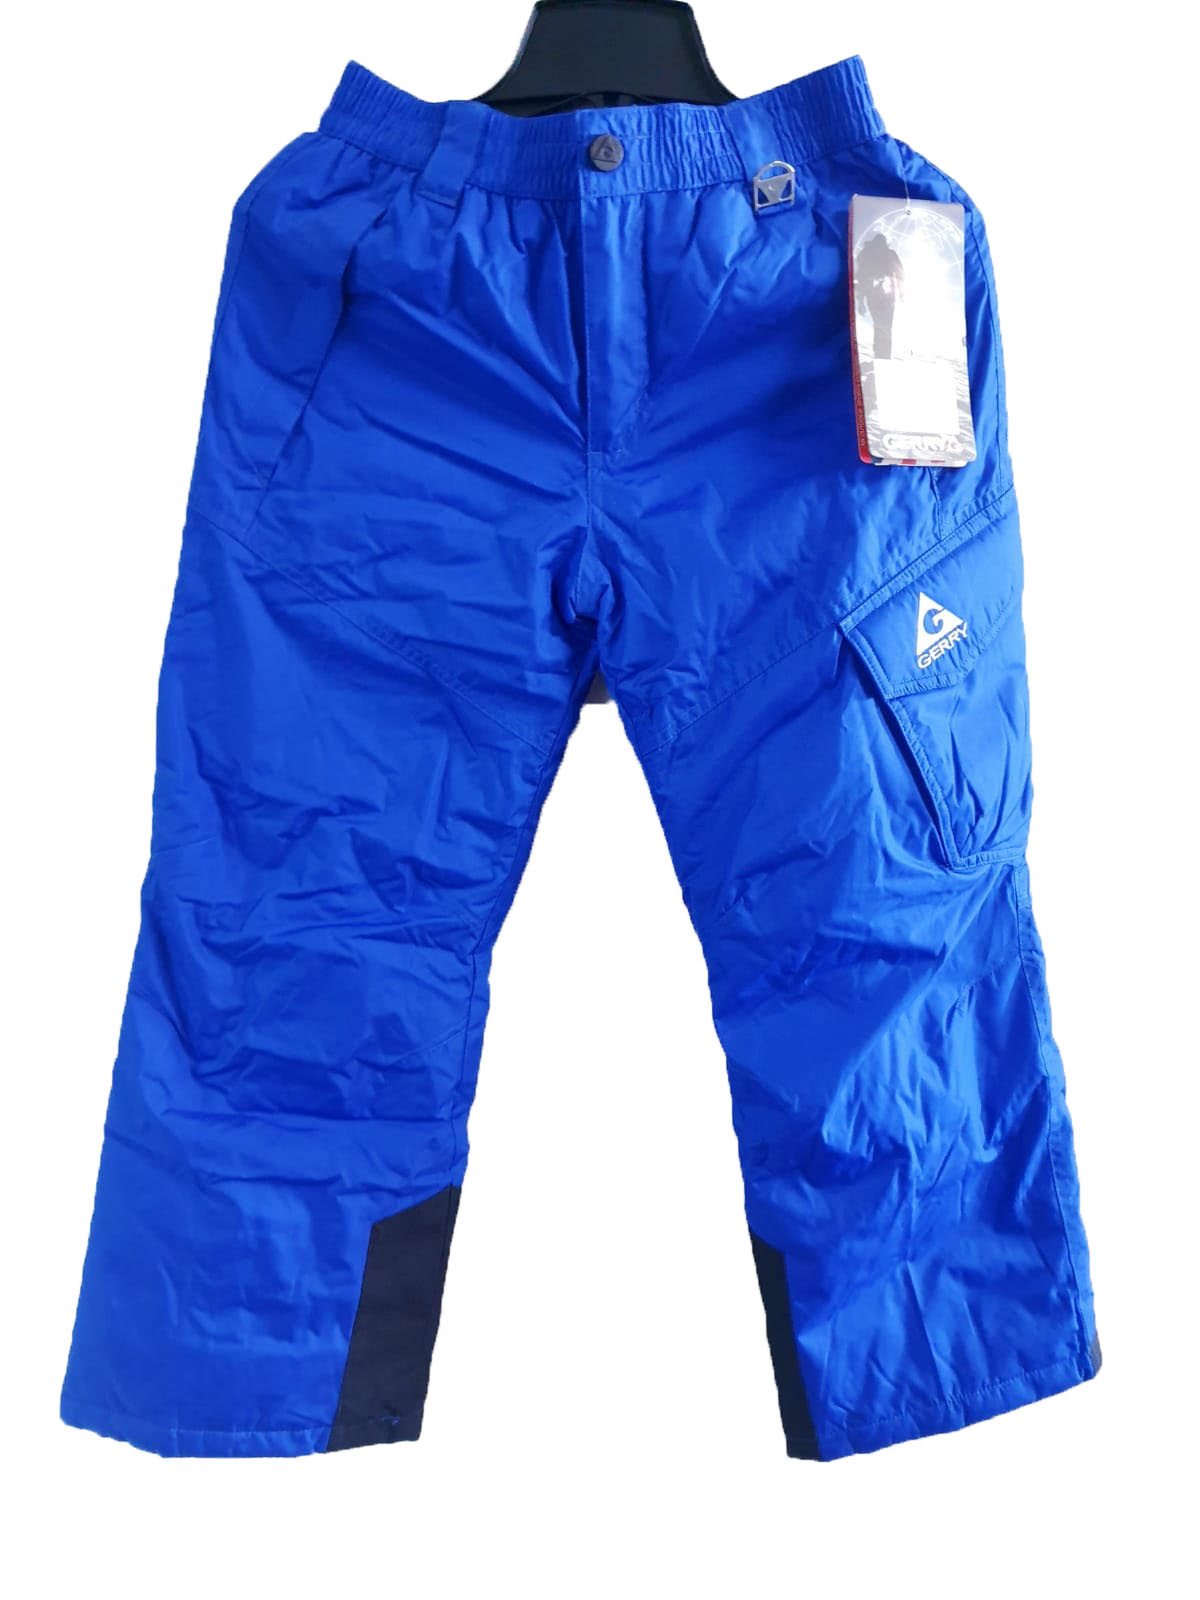 Gerry Boy's Insulated Snow Pants, Royal Blue, Medium 887219559716 | eBay